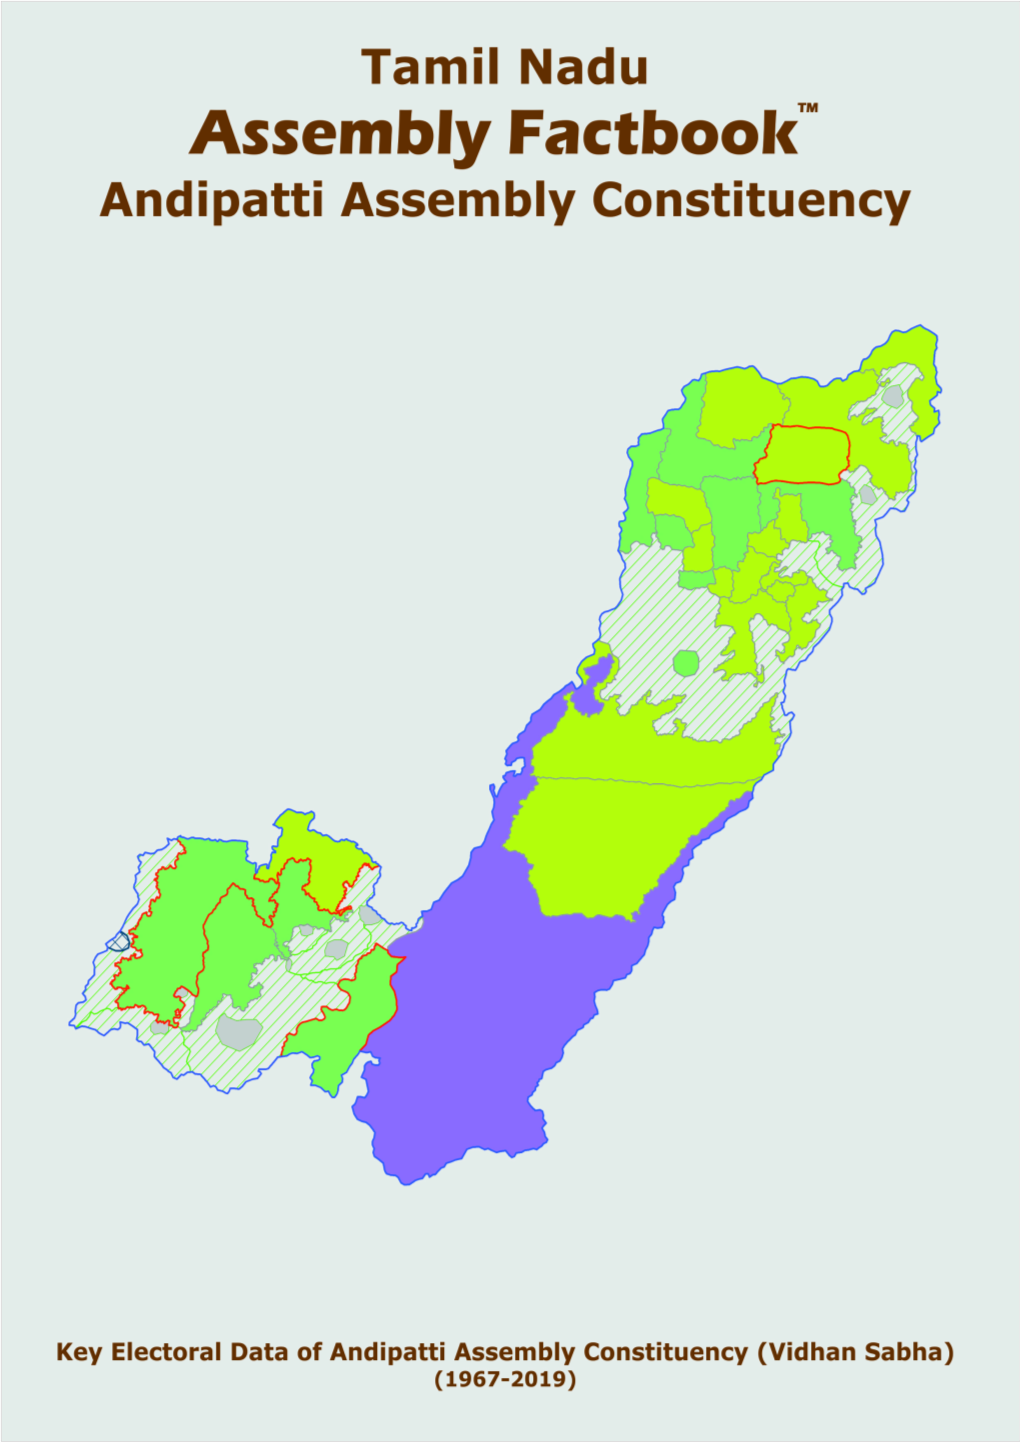 Andipatti Assembly Tamil Nadu Factbook